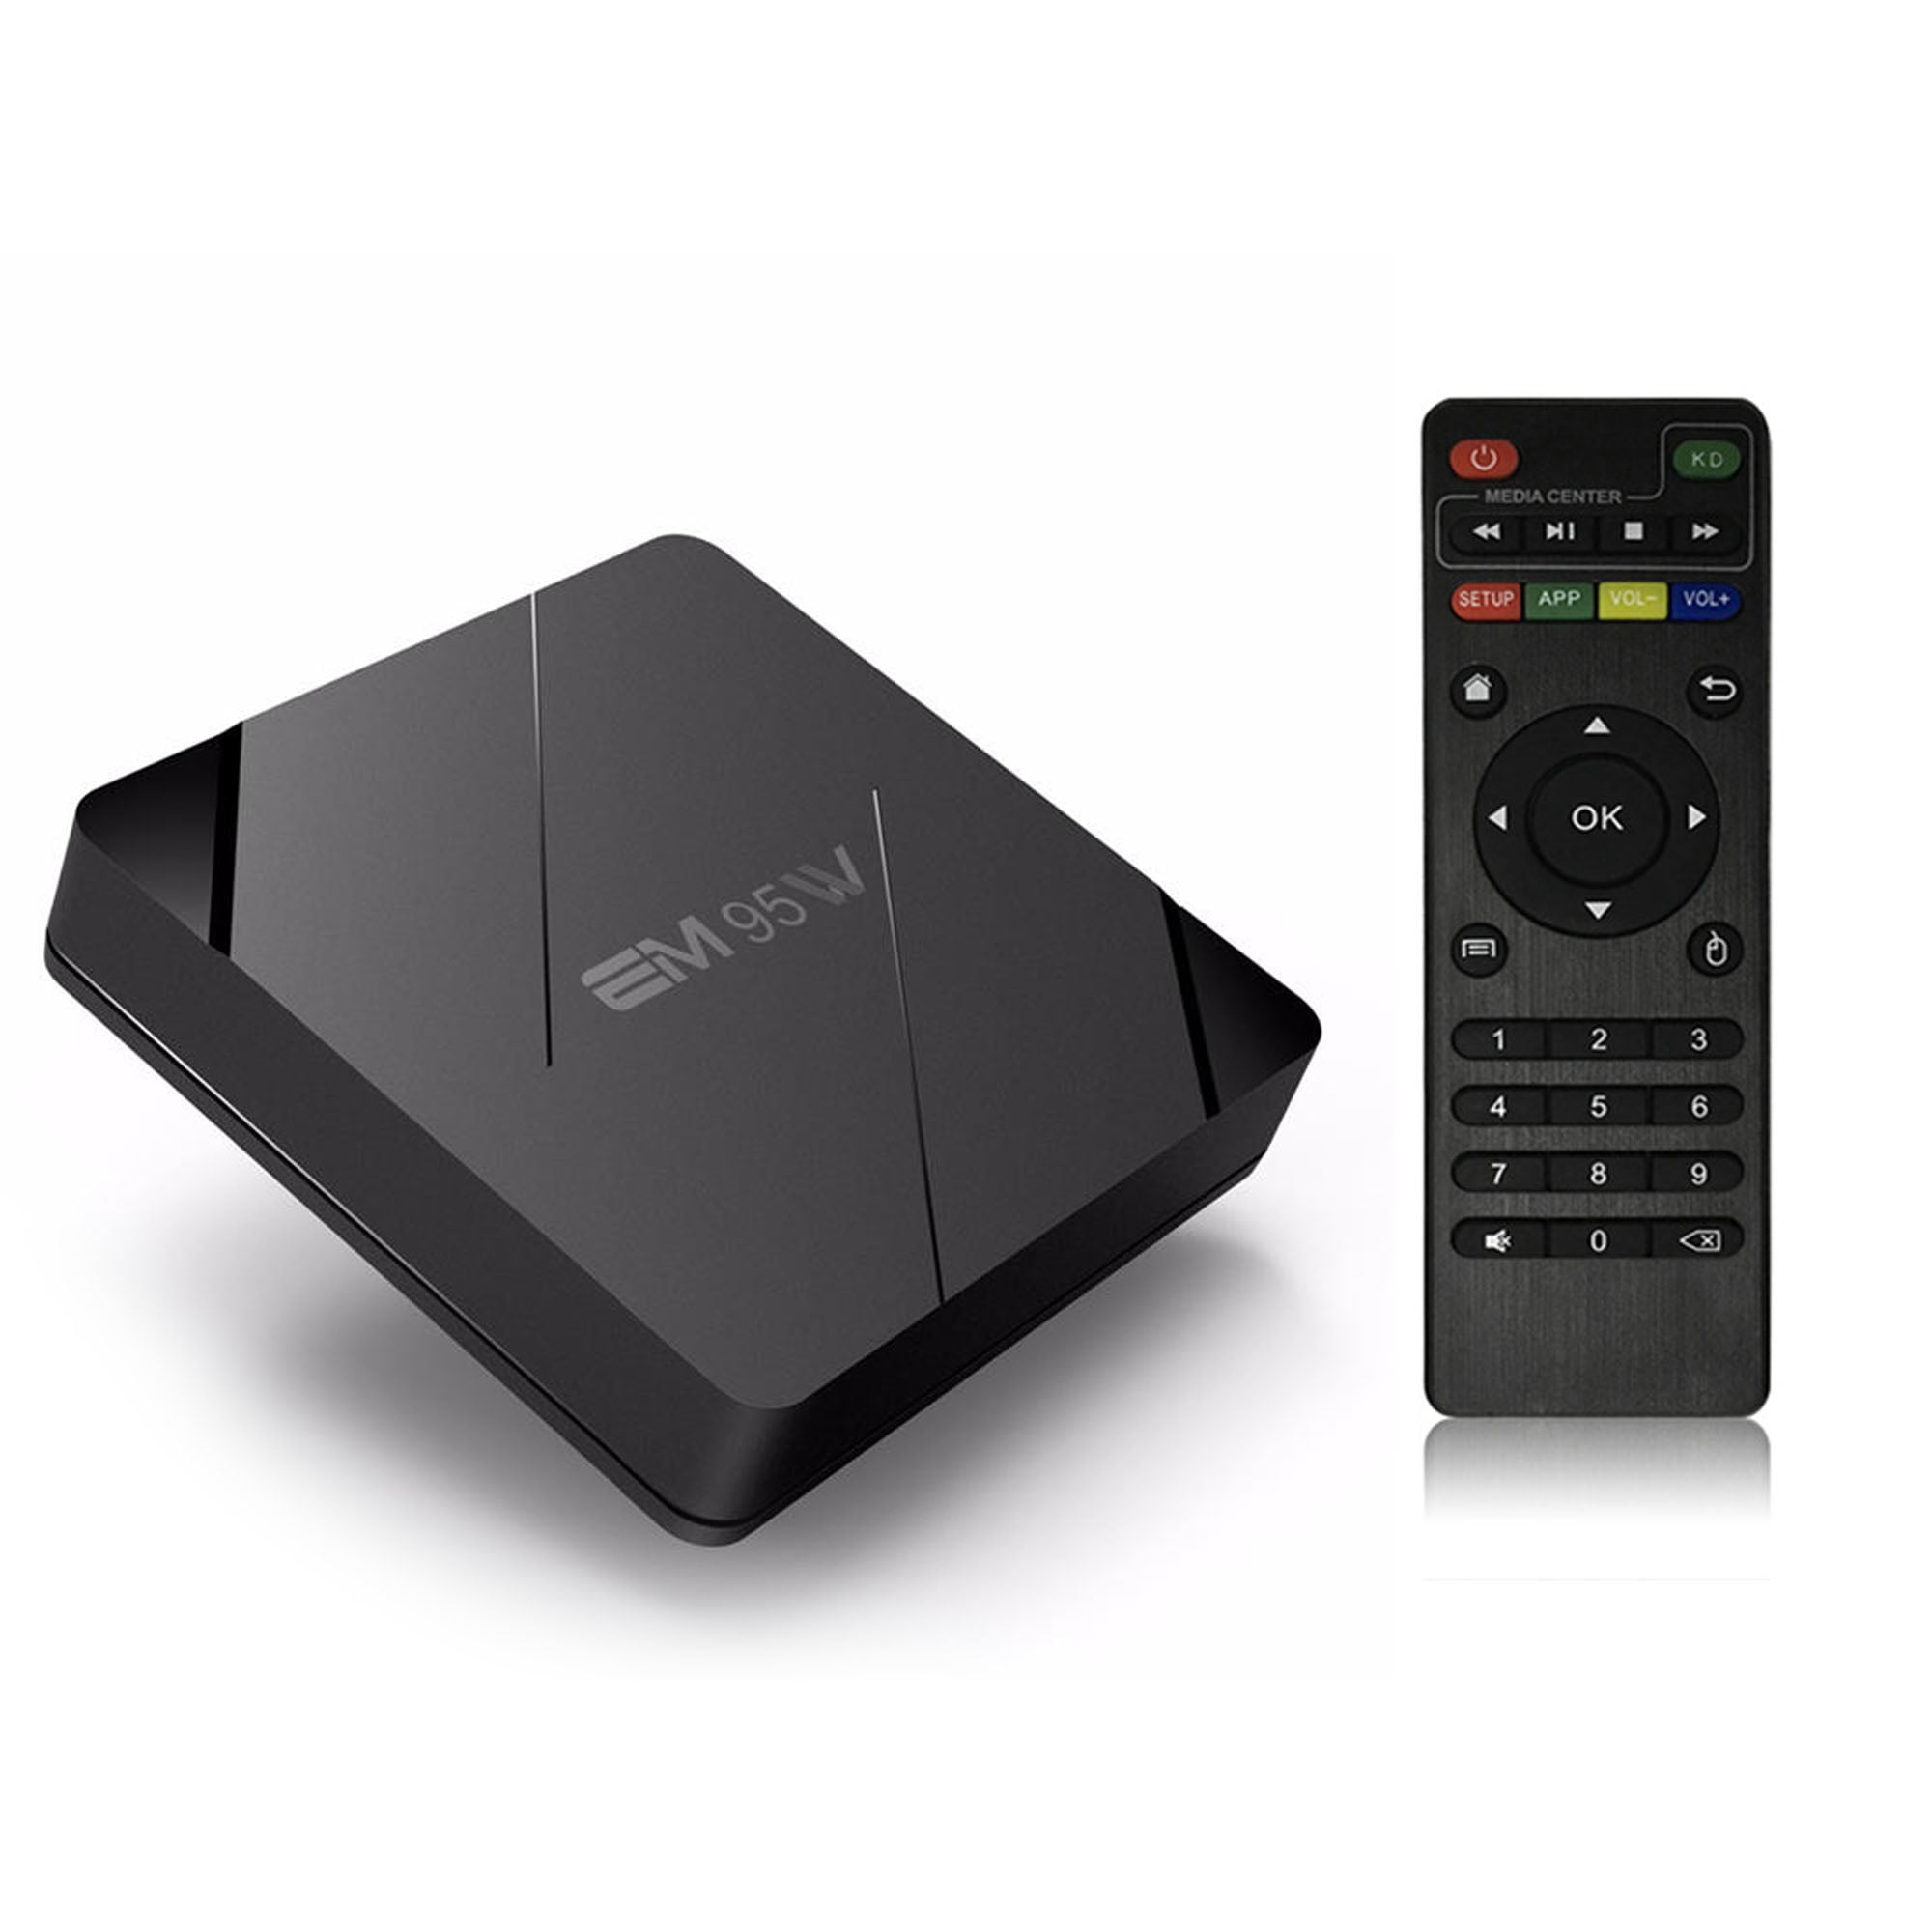 ENYBOX EM95W Smart TV Box Amlogic S905W Quad Core 2GB+16GB Android 7.1